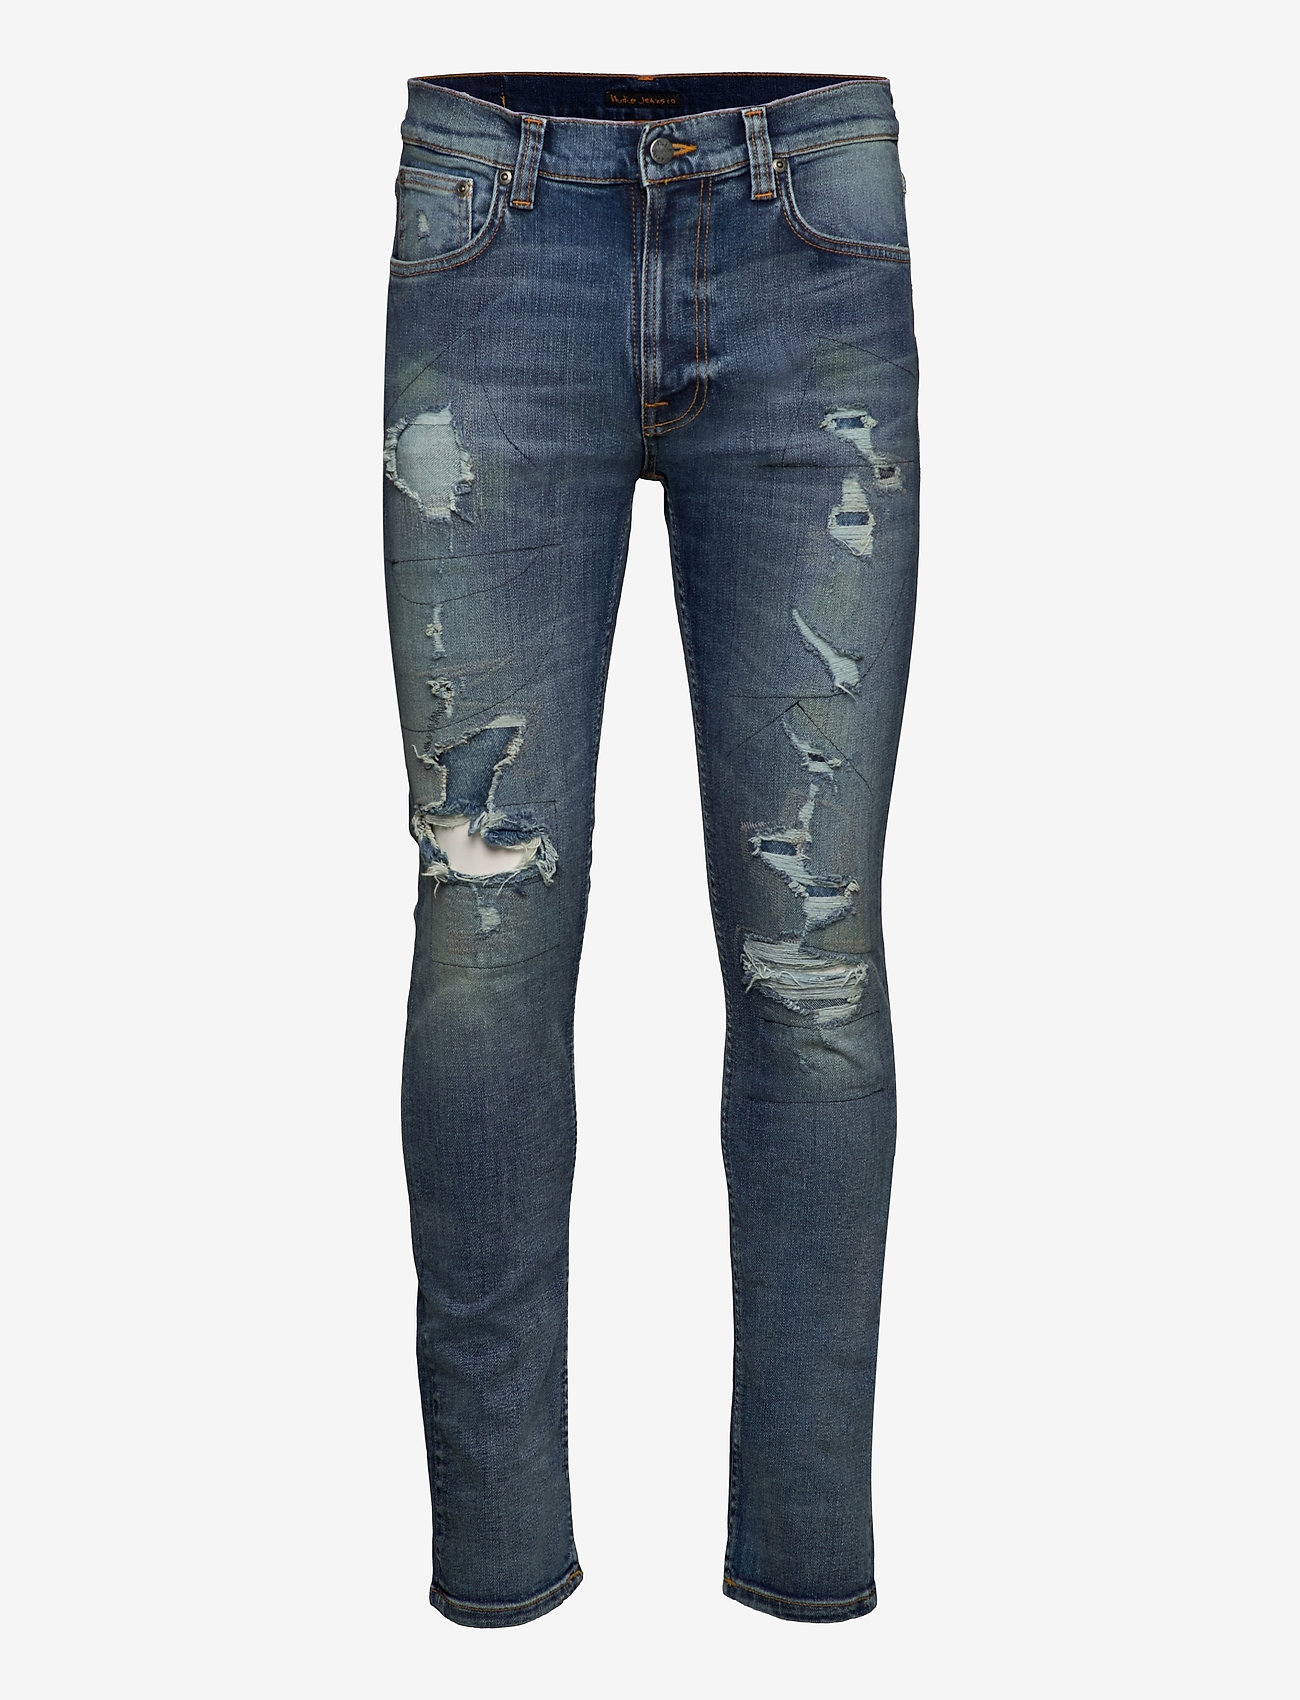 Nudie Jeans - Lean Dean Authentic Stitched - slim jeans - authentic stitched - 0